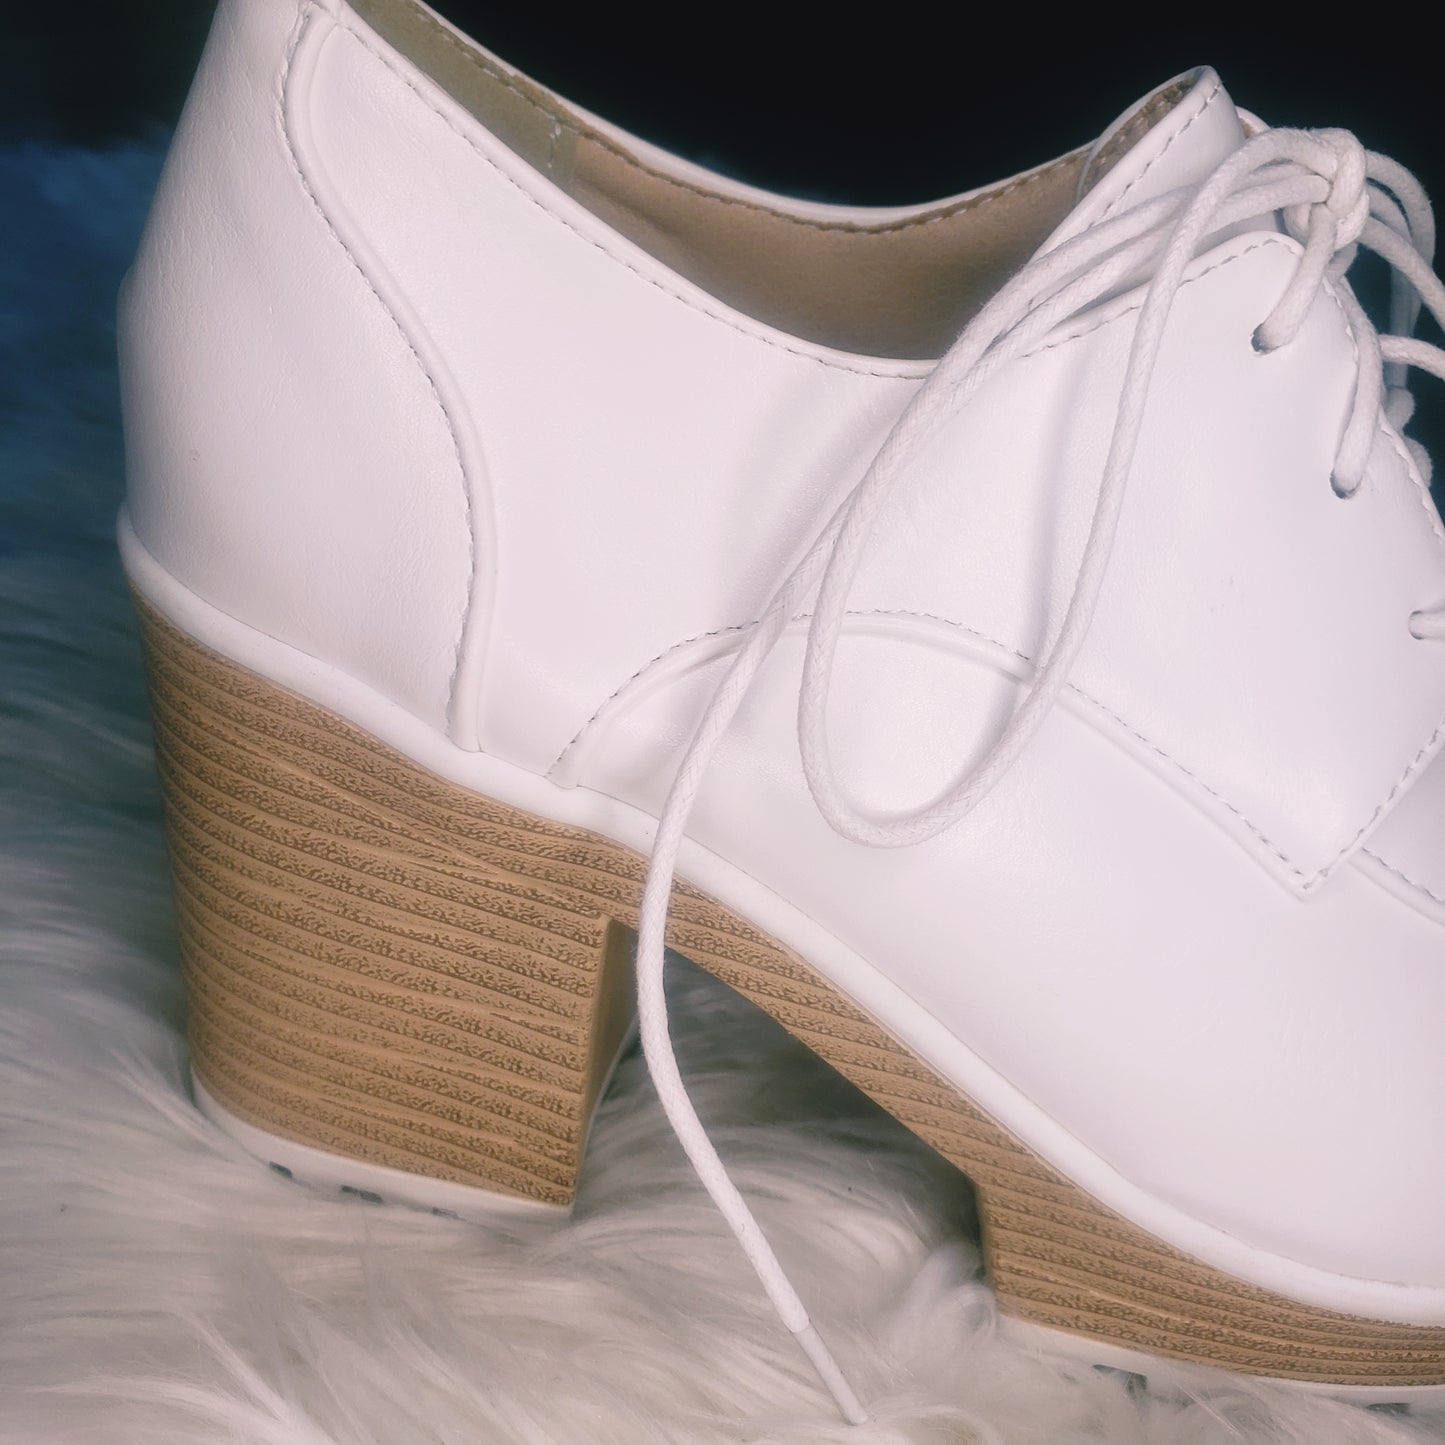 White retro 70's disco shoes, platform chunky oxford heels.